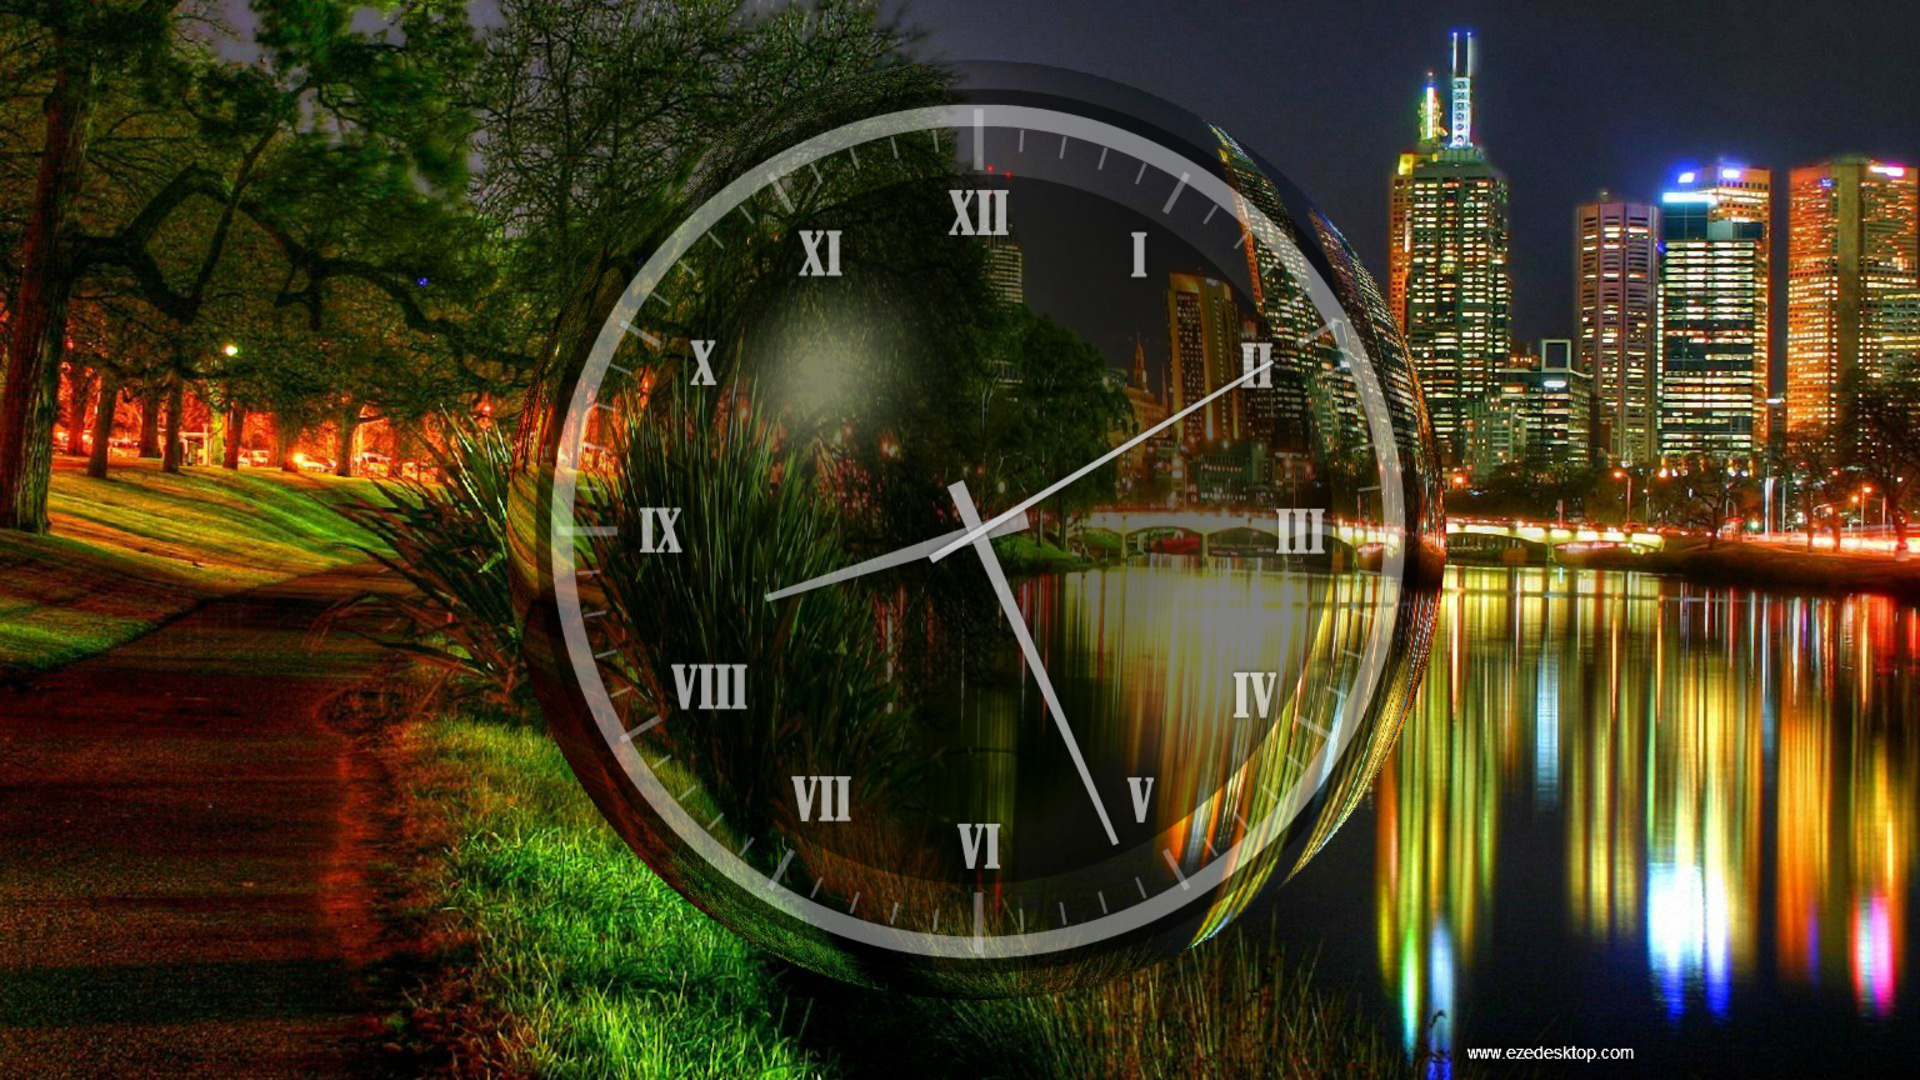 Windows 10 Analog Clock Screensaver - New York Clock Screensaver